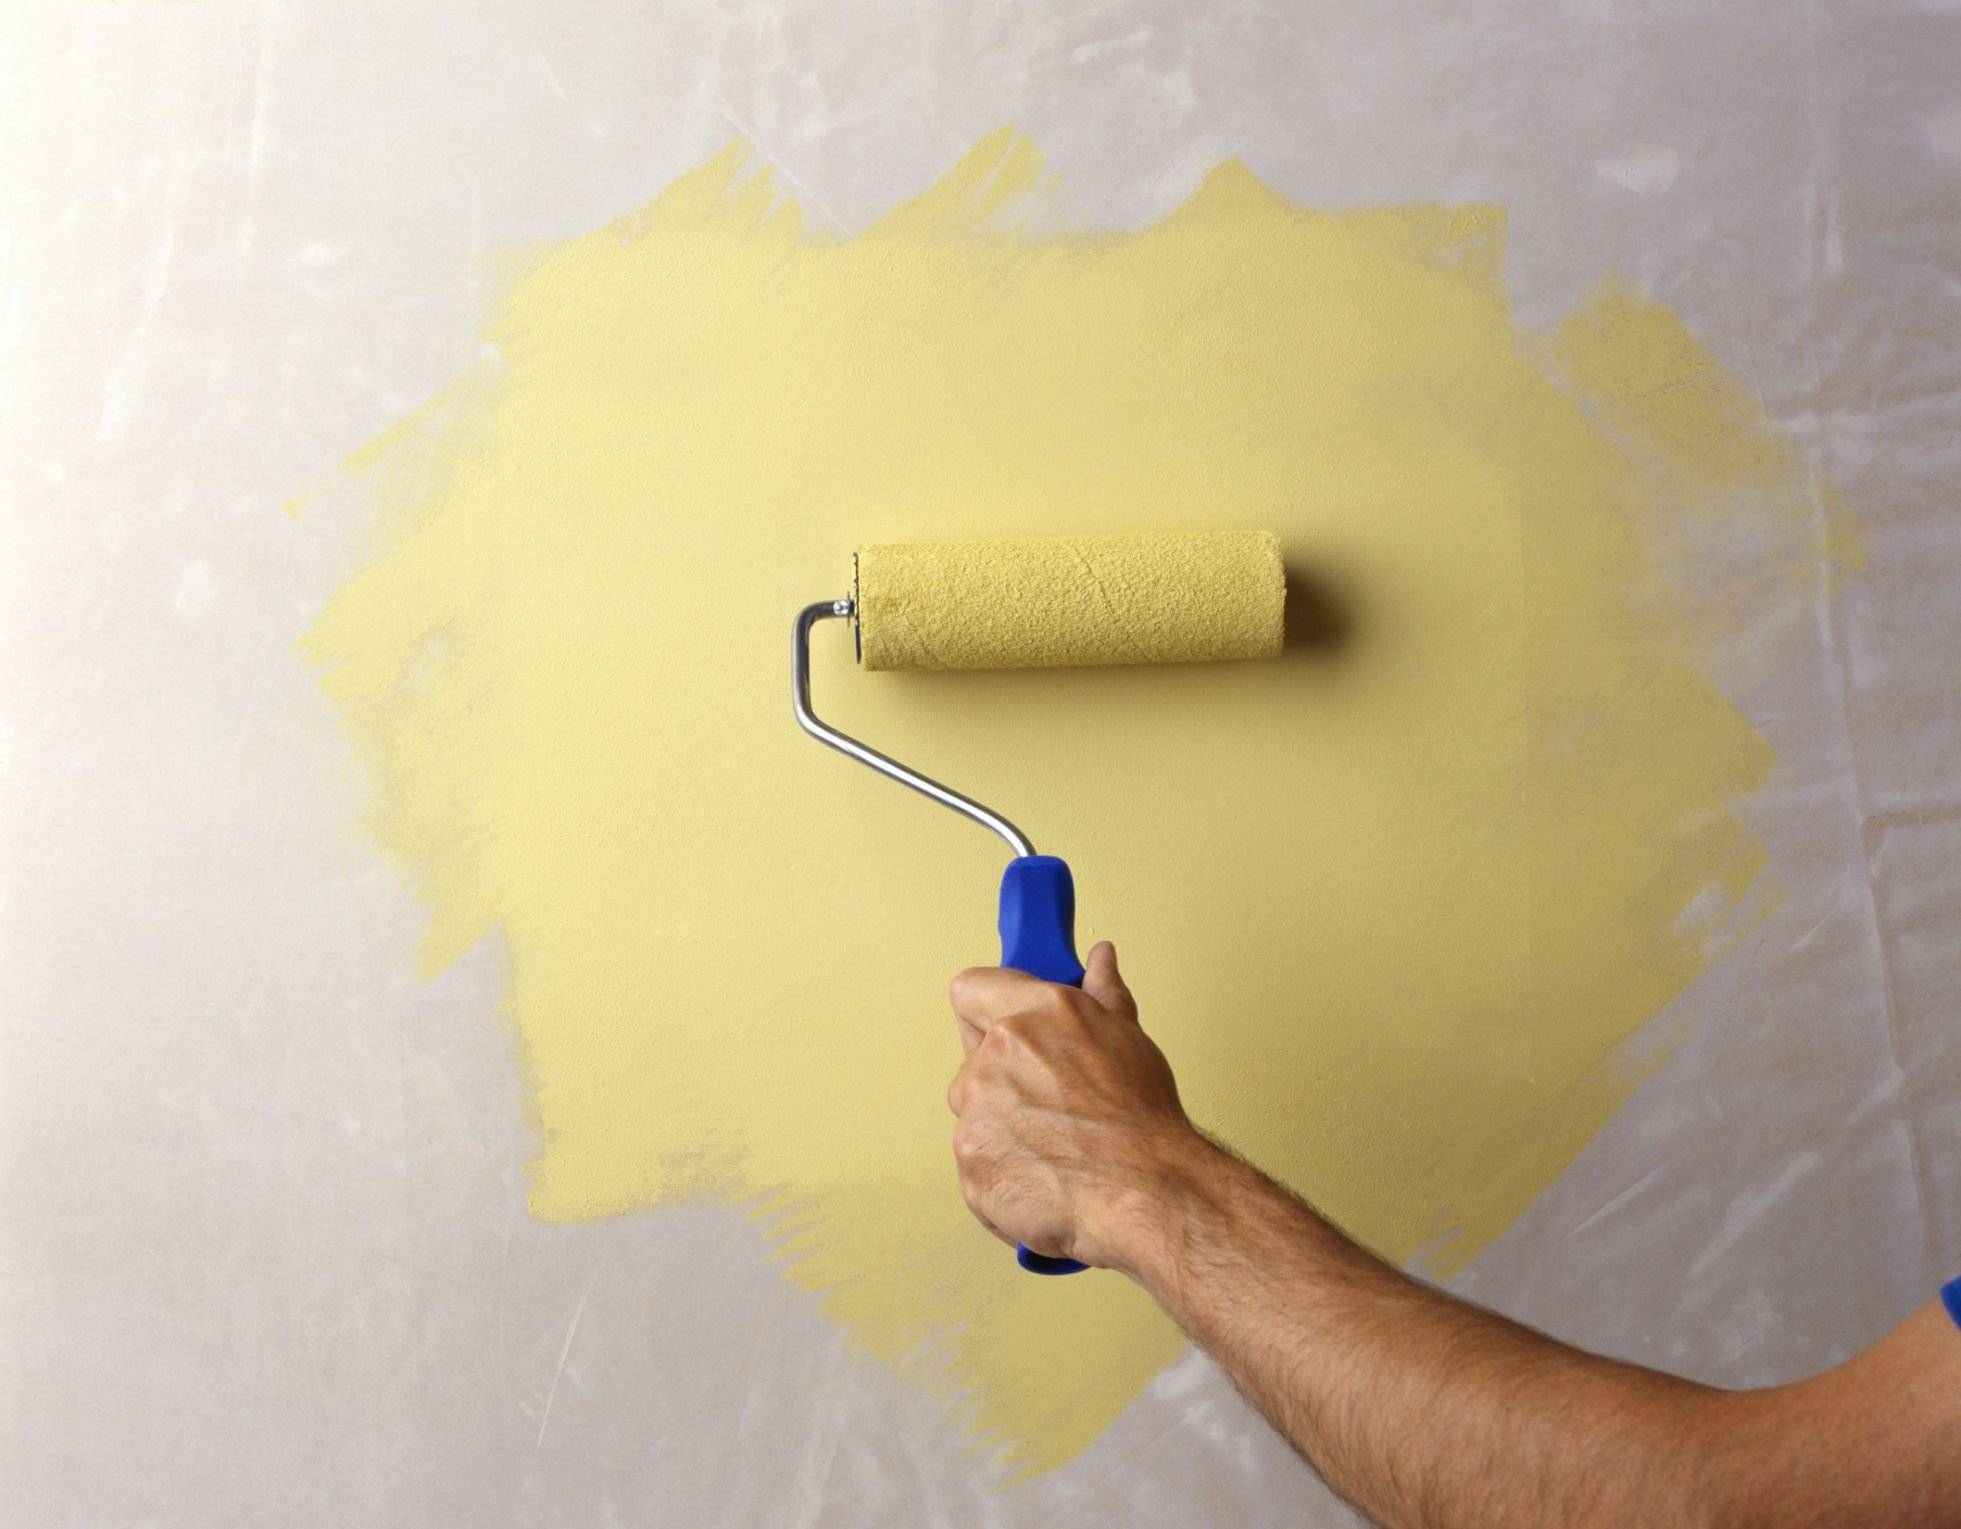 Покраска обоев своими руками: инструкция для стен и потолка